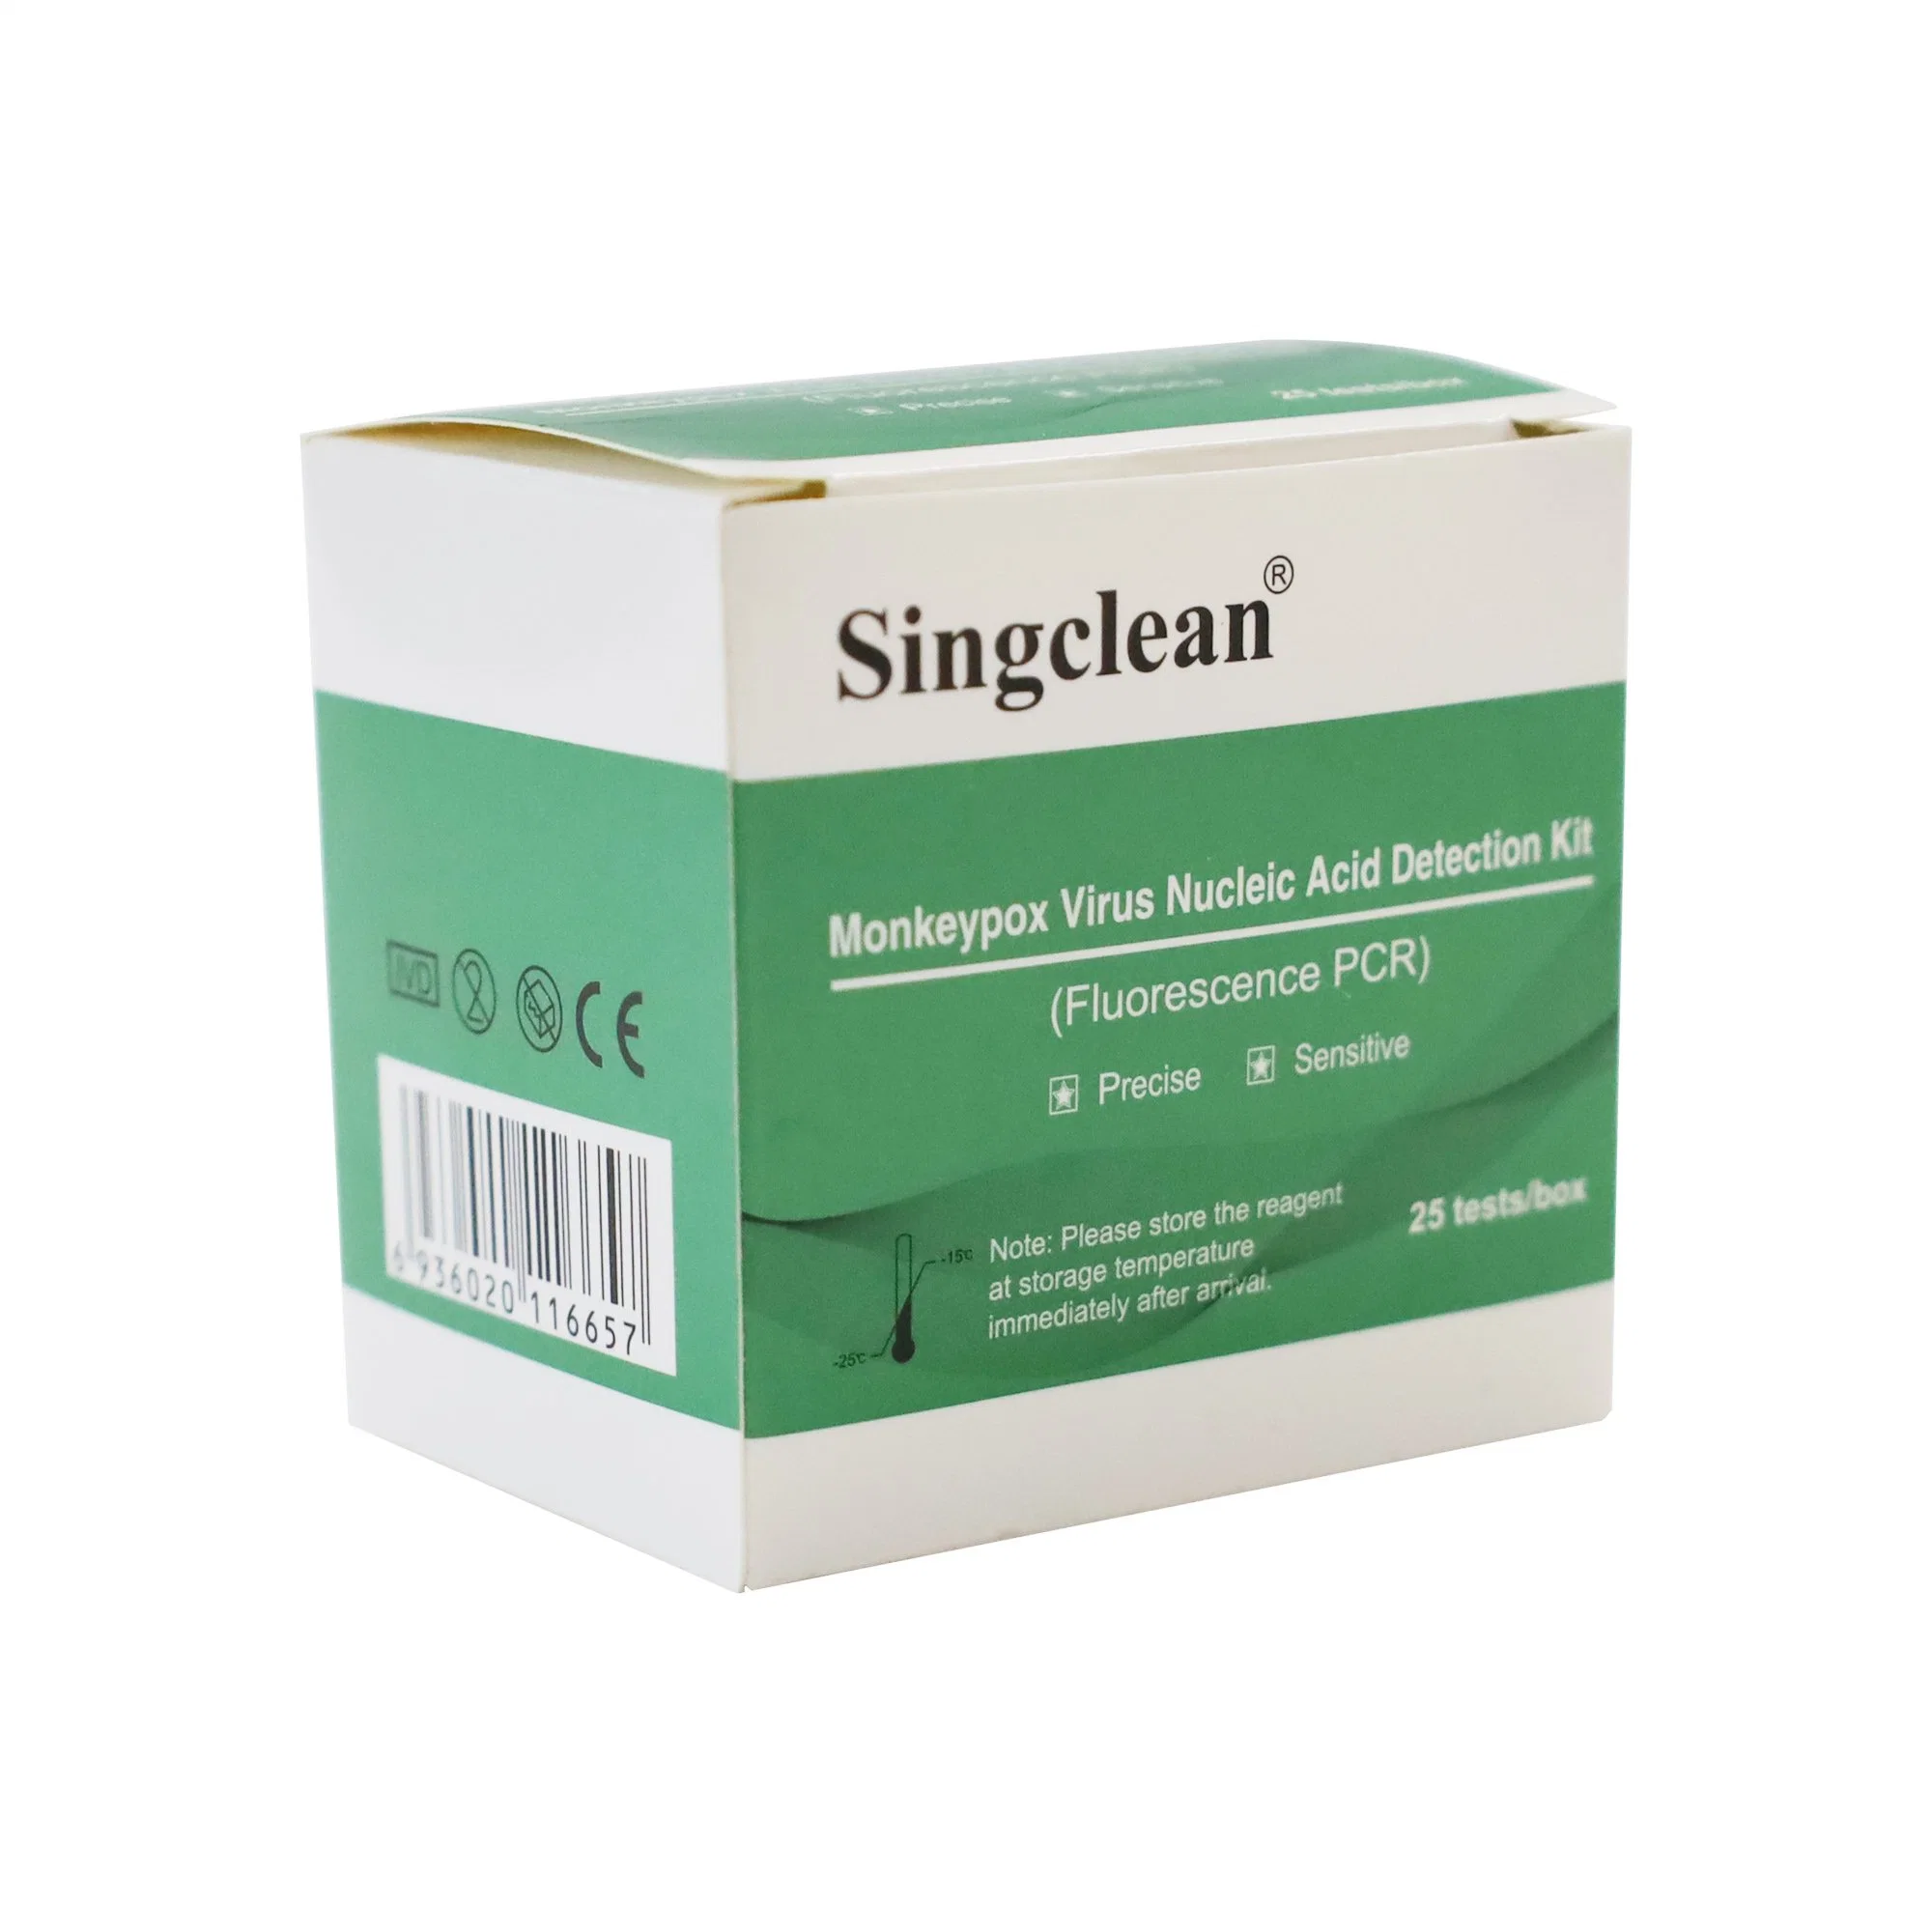 Singclean Monkeypox Virus Nucleic Acid Detection Kit (Fluorescence PCR) Diagnostic Test with CE Certificate